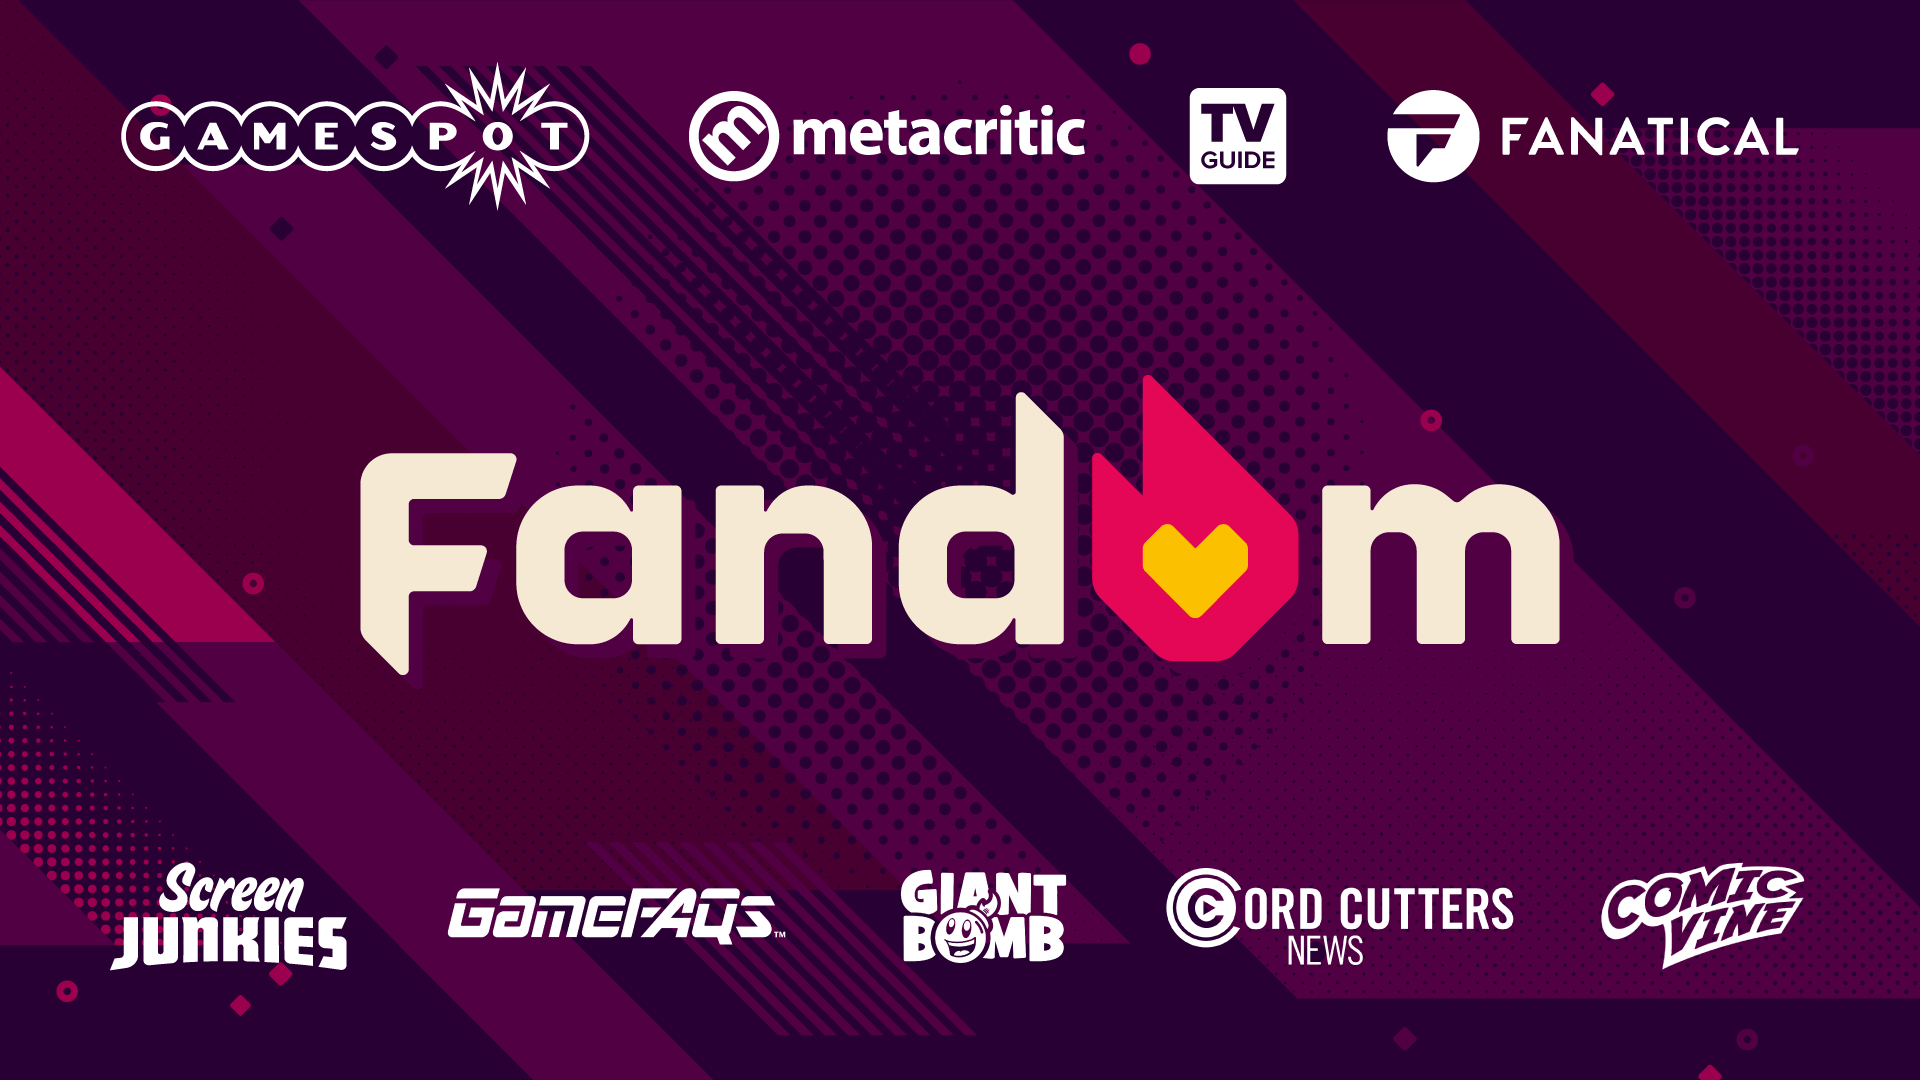 Fandom收购GameSpot、收购Giant Bomb、媒体Metacritic等媒体